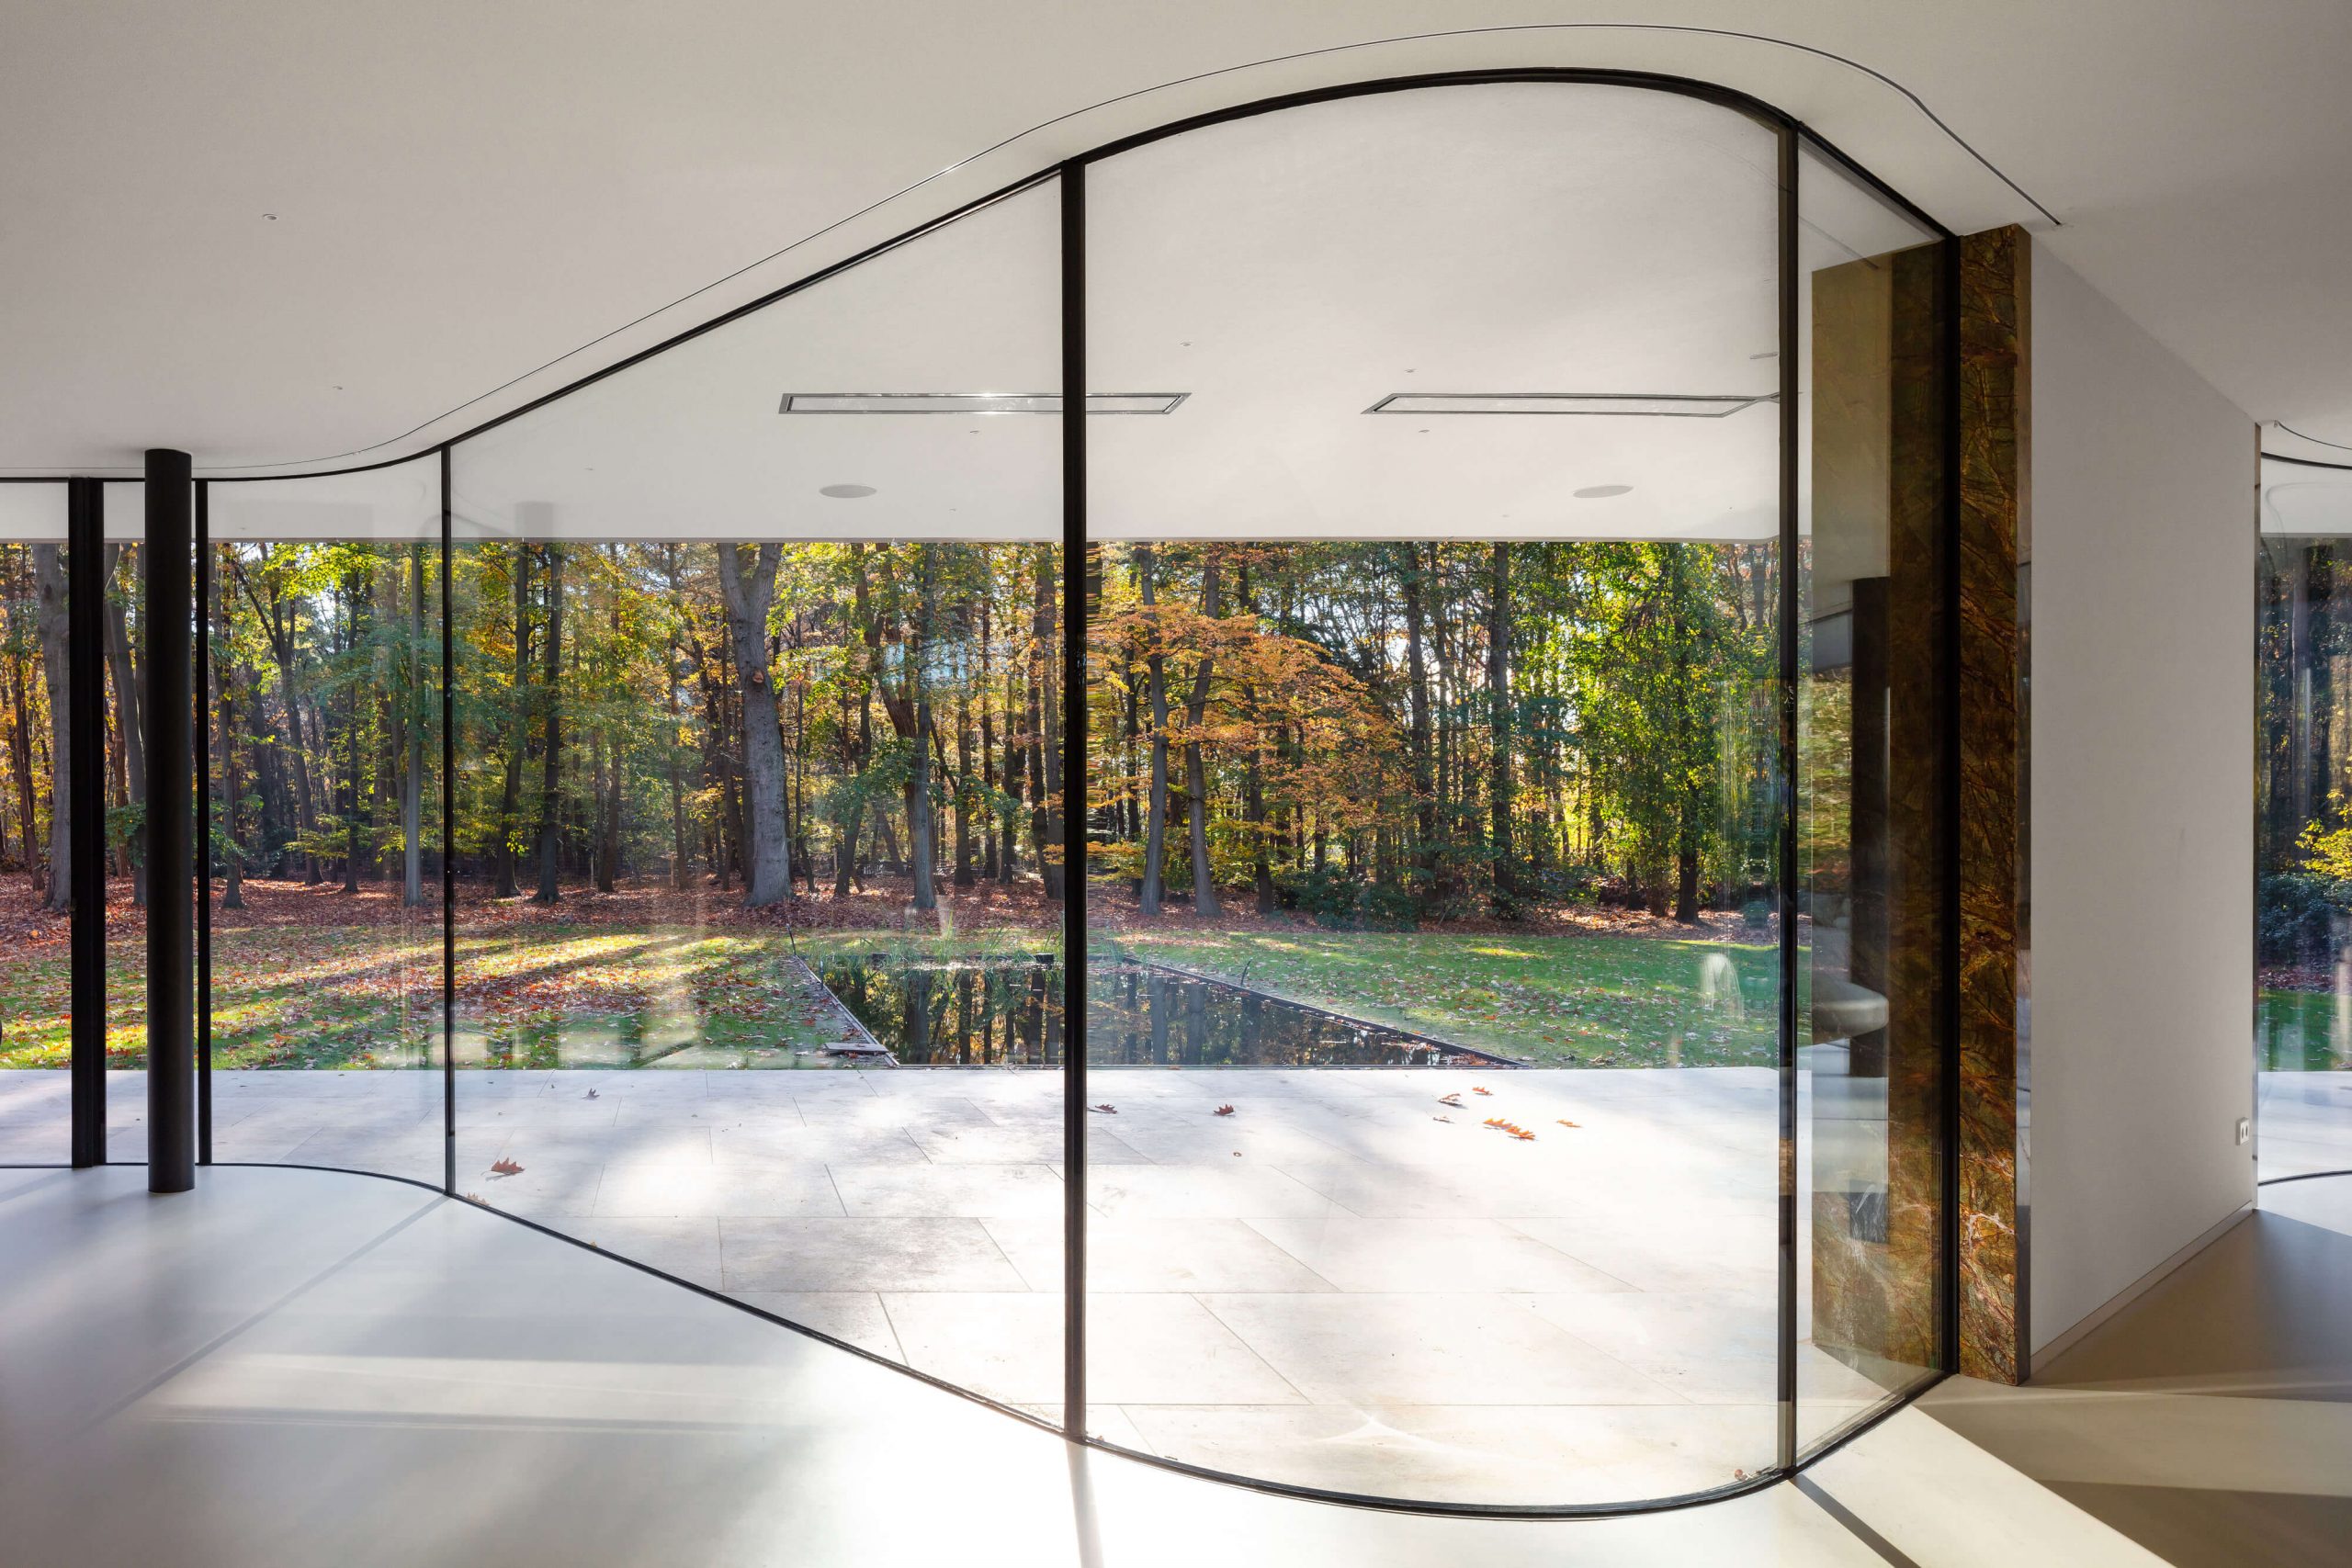 Casa Contemporânea na Holanda - Villa JM, sala de estar minimalista com vidros do piso ao teto curvo